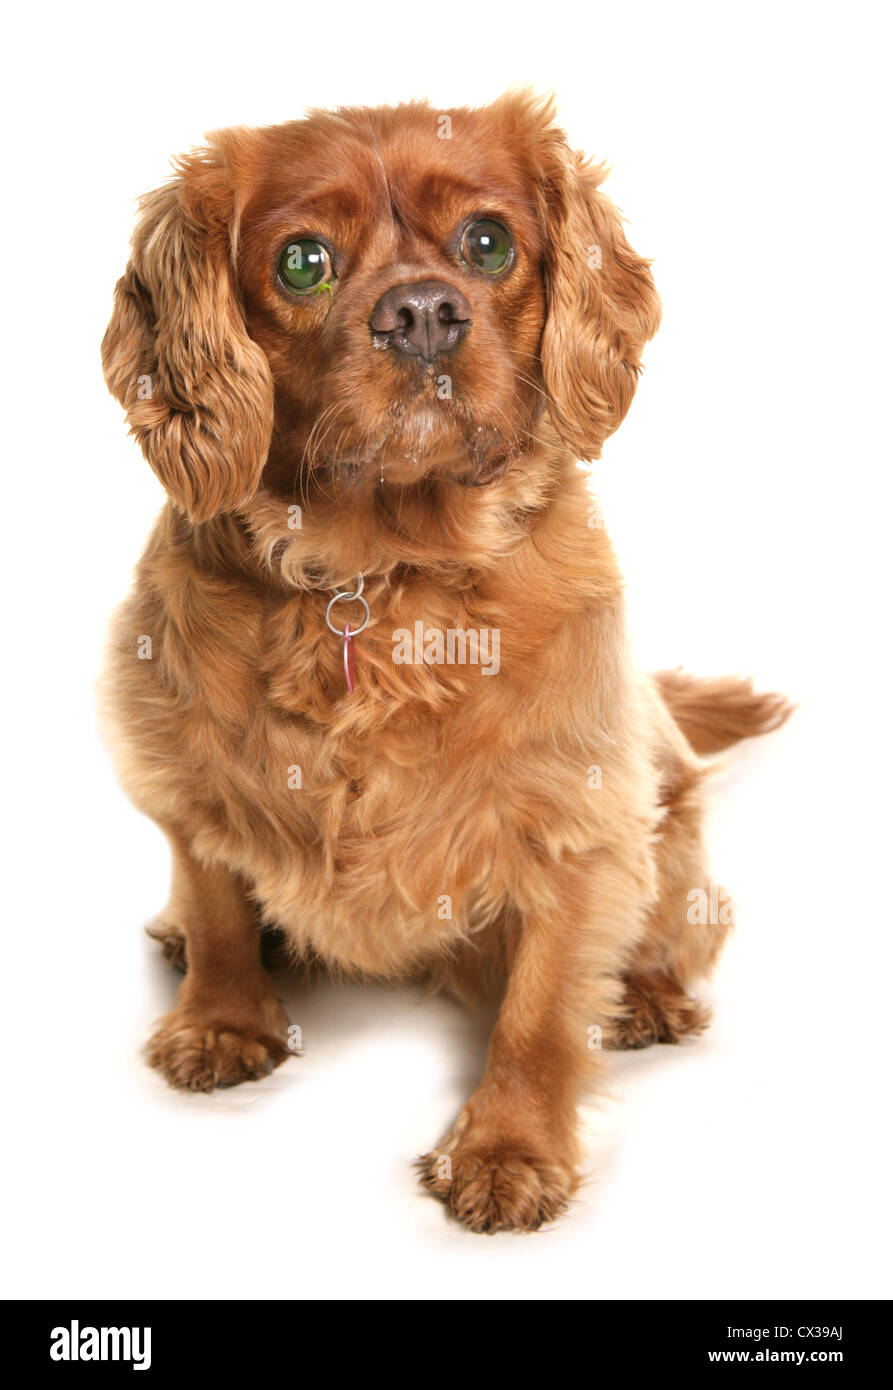 King charles spaniel Single dog with eye drops Studio, UK Stock Photo